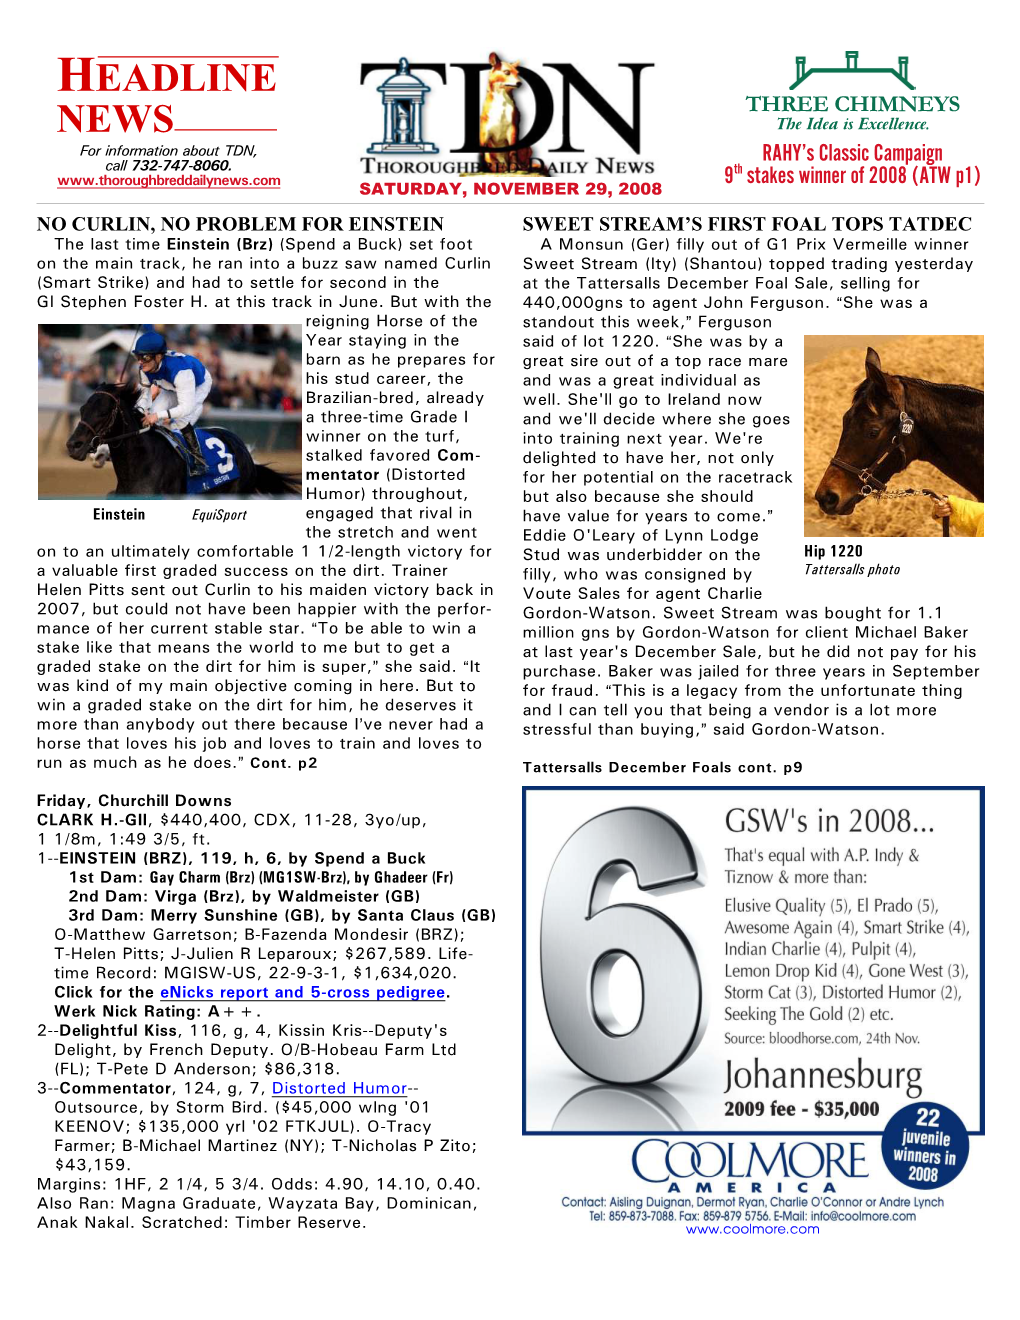 HEADLINE NEWS • 11/29/08 • PAGE 2 of 14